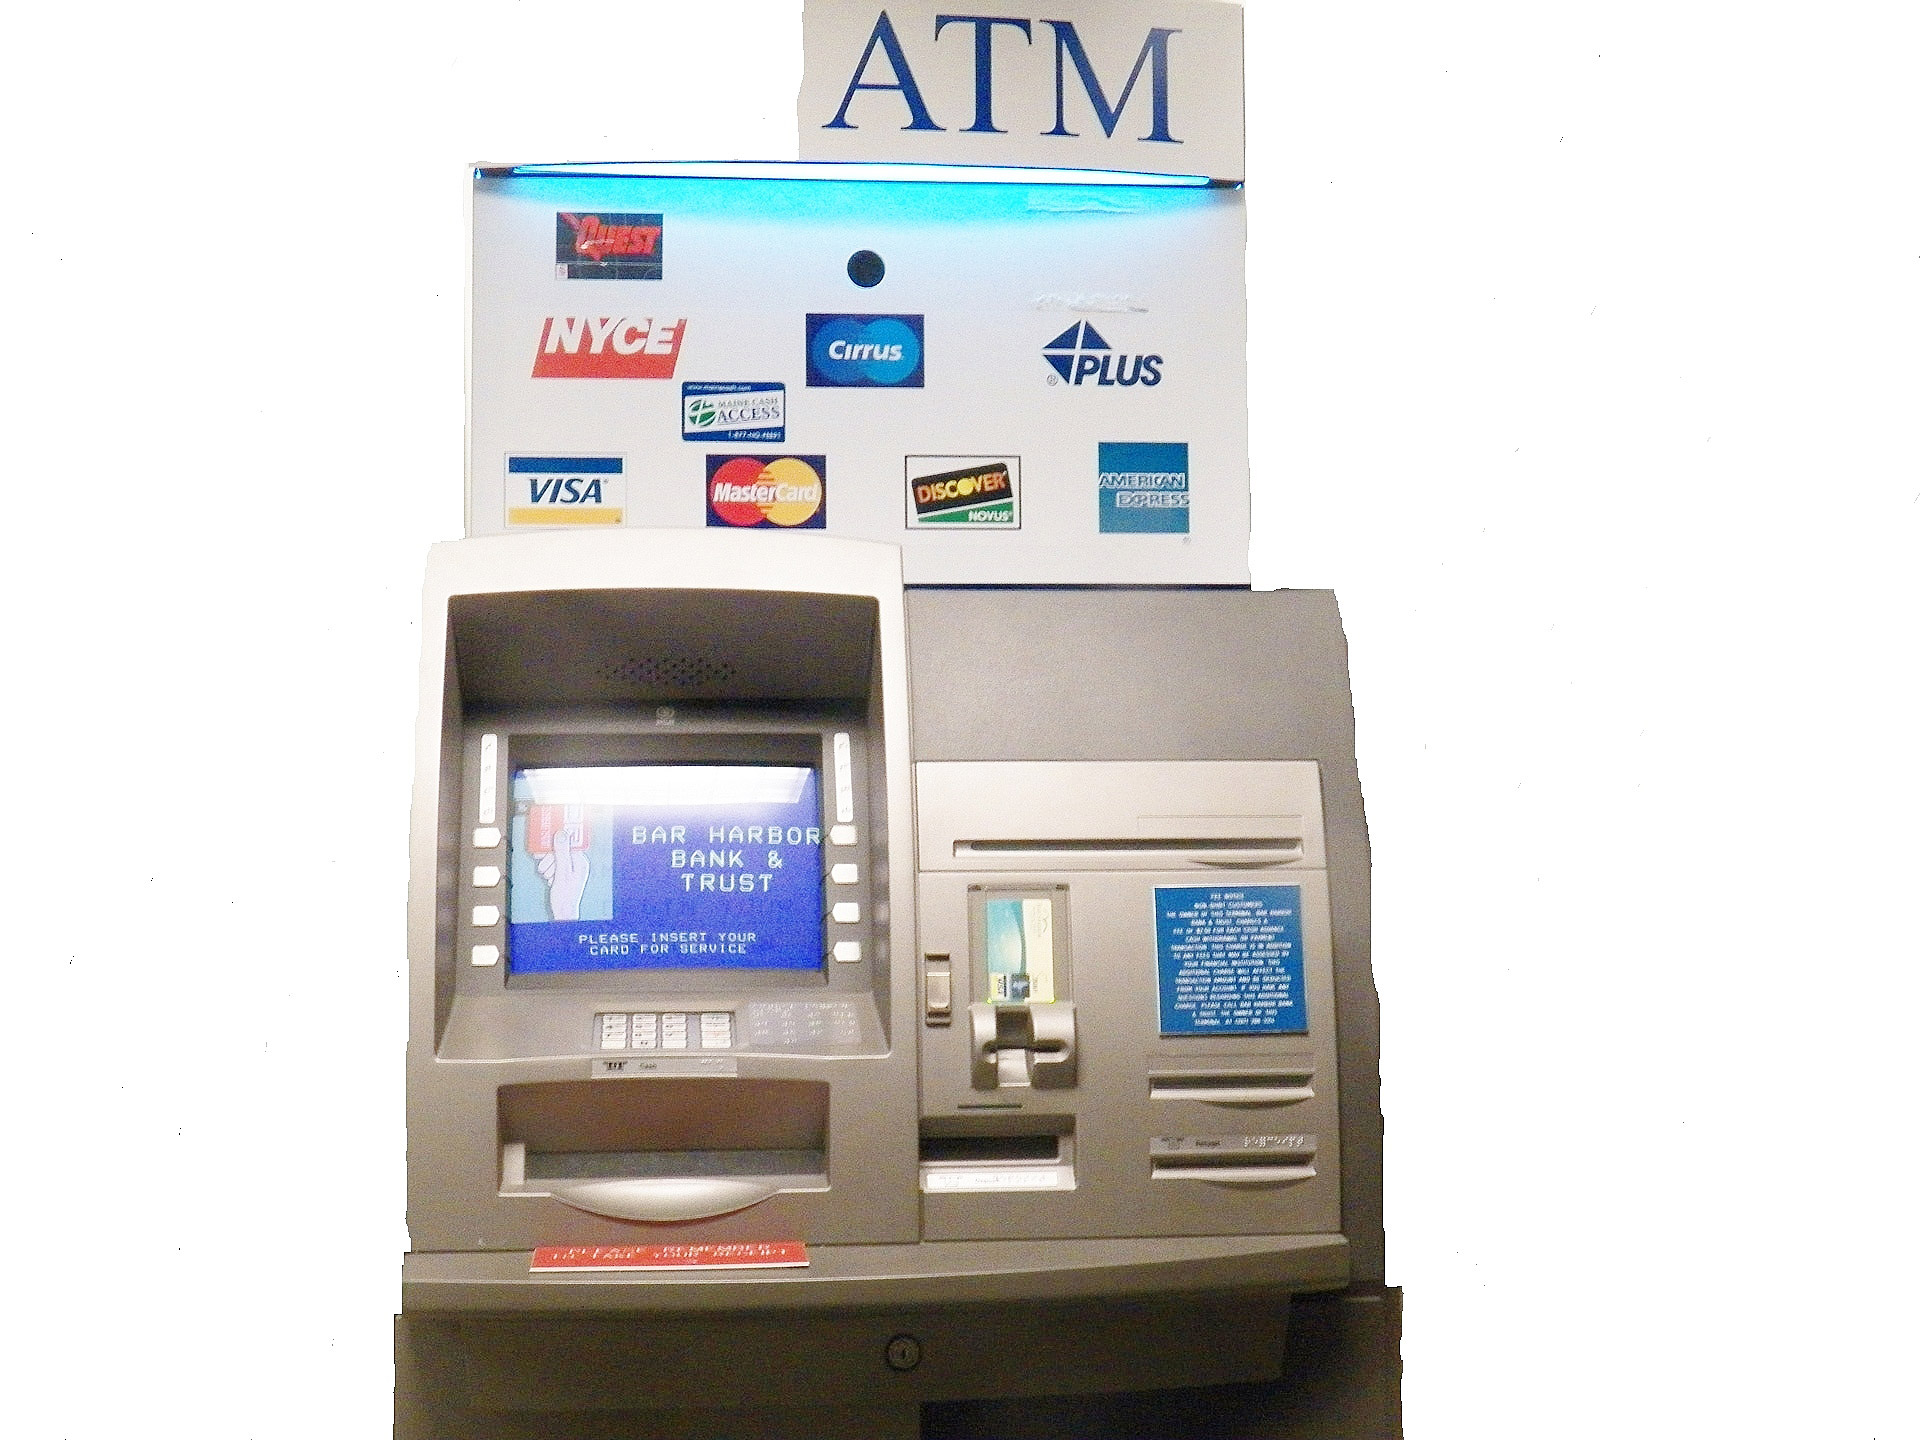 Bank misr. Атм Банкомат. Банкомат (ATM). Атм картинка. Bred Bank атм.